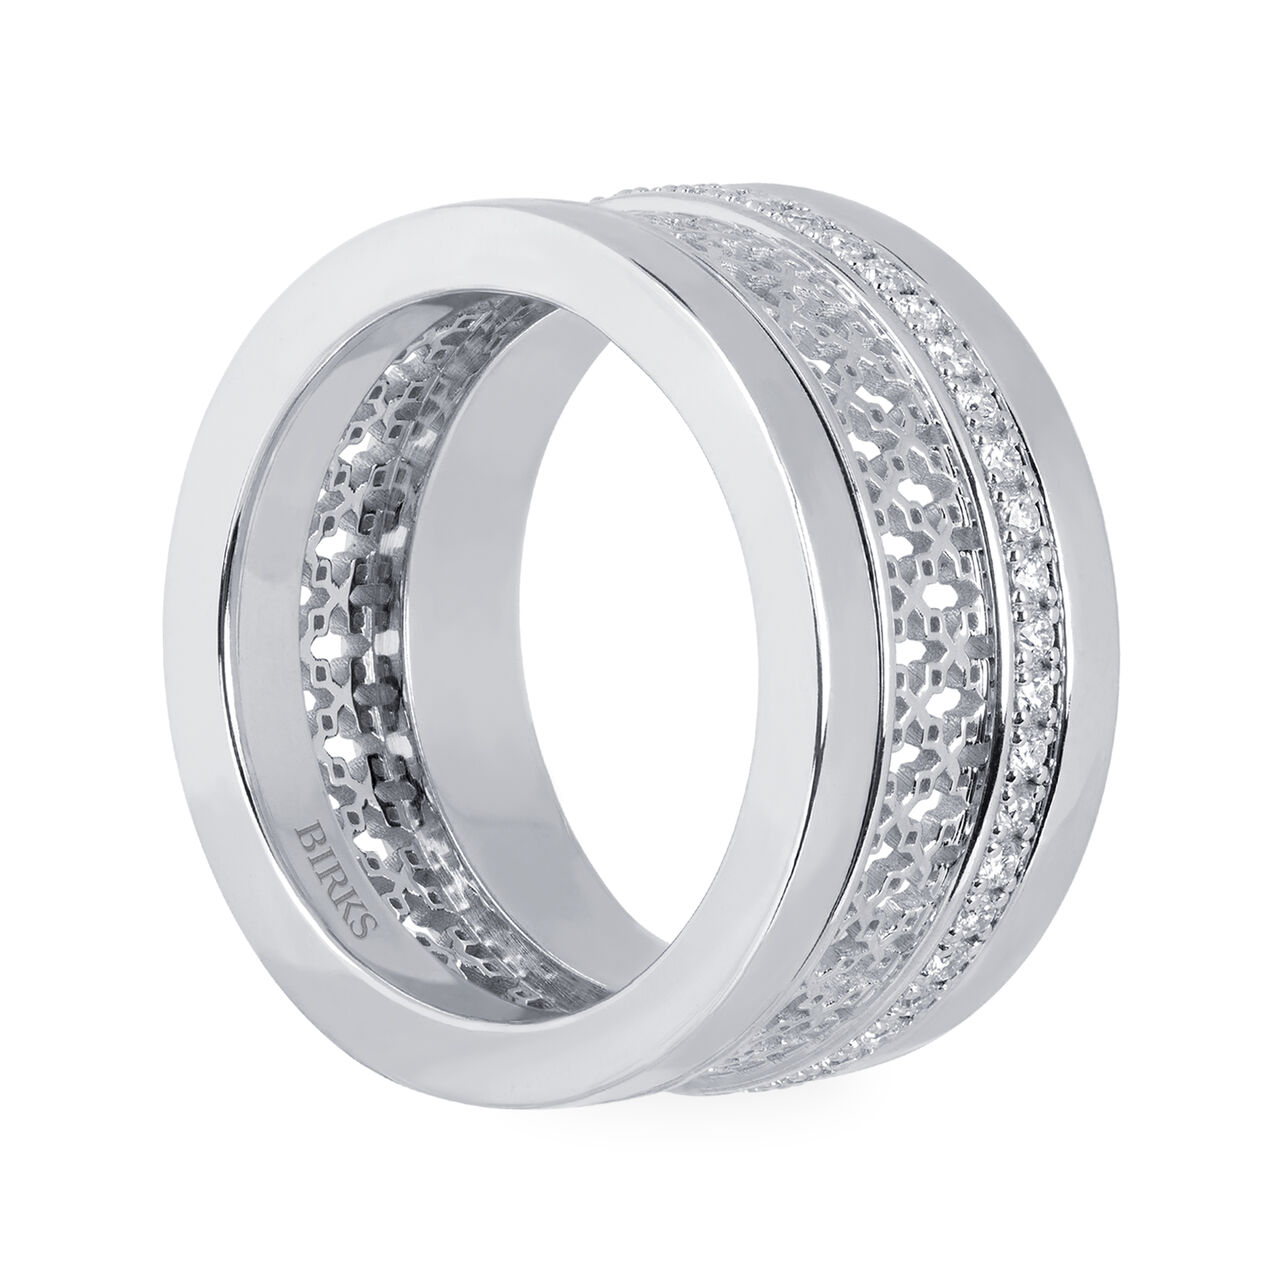 Birks Dare to Dream ® White Gold and Diamond Ring 450015429264